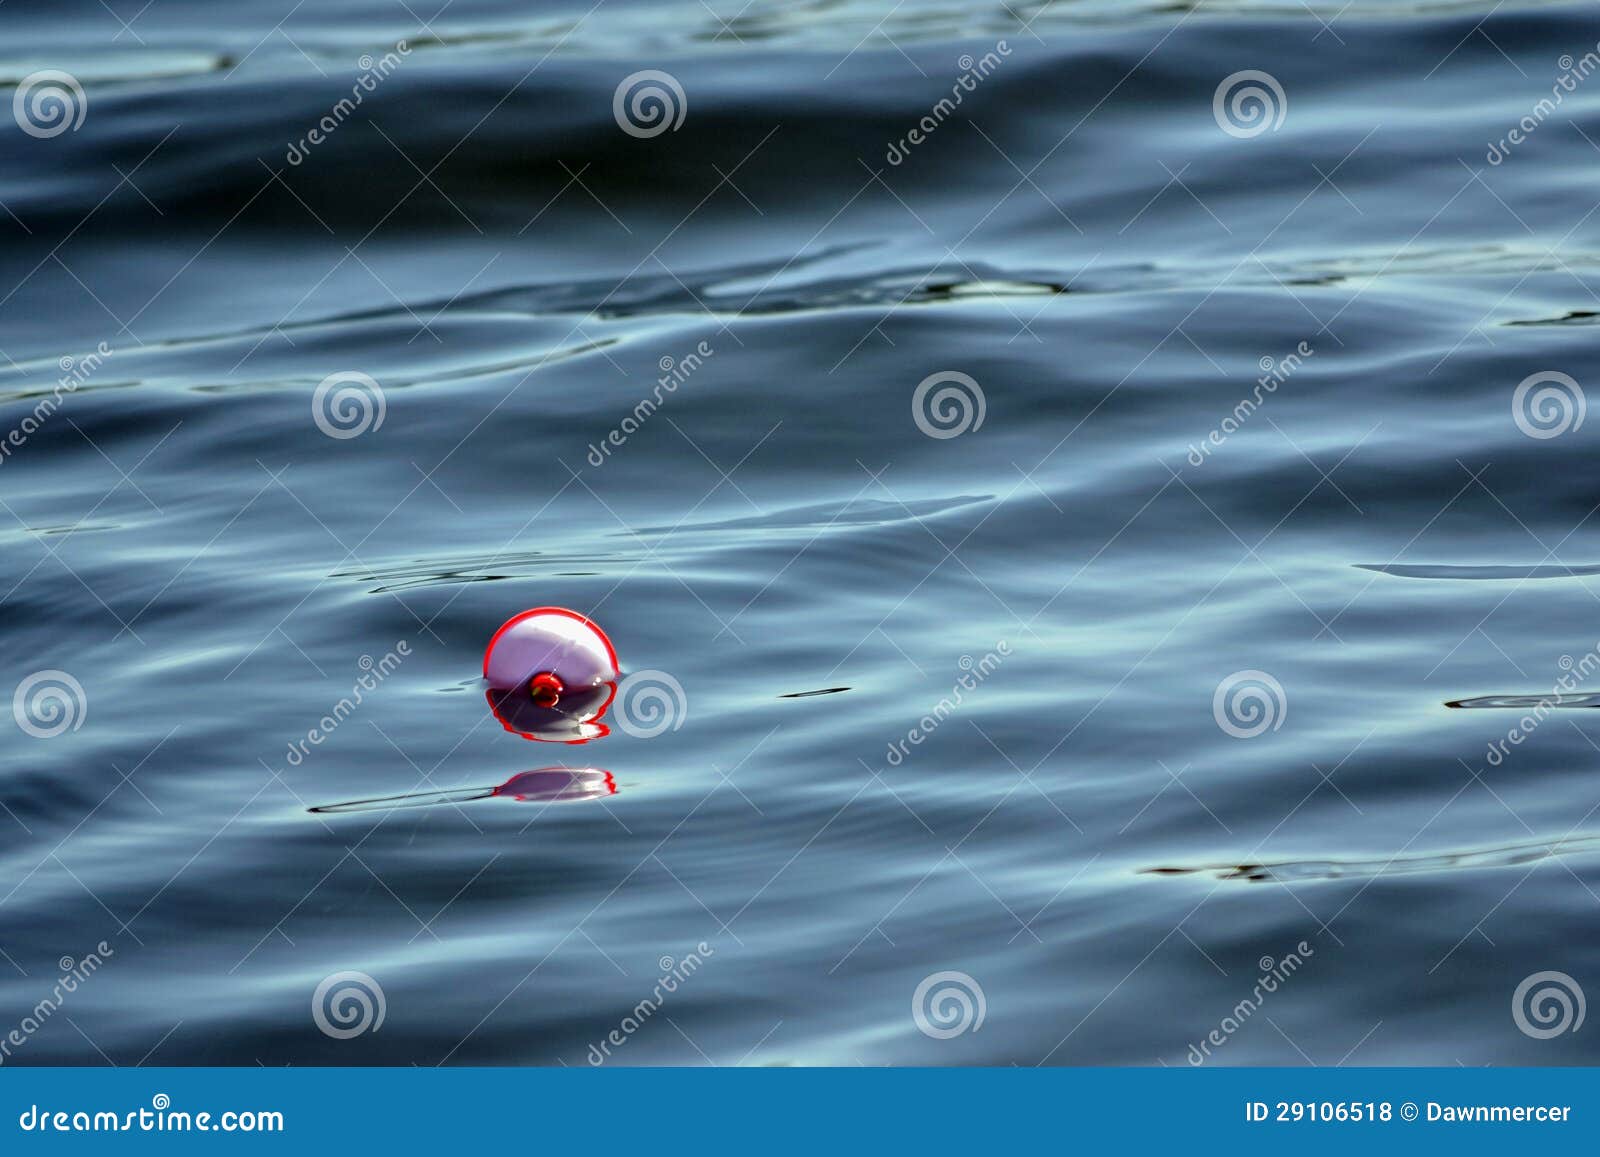 Fishing Bobber Floating in Water Stock Photo - Image of lake